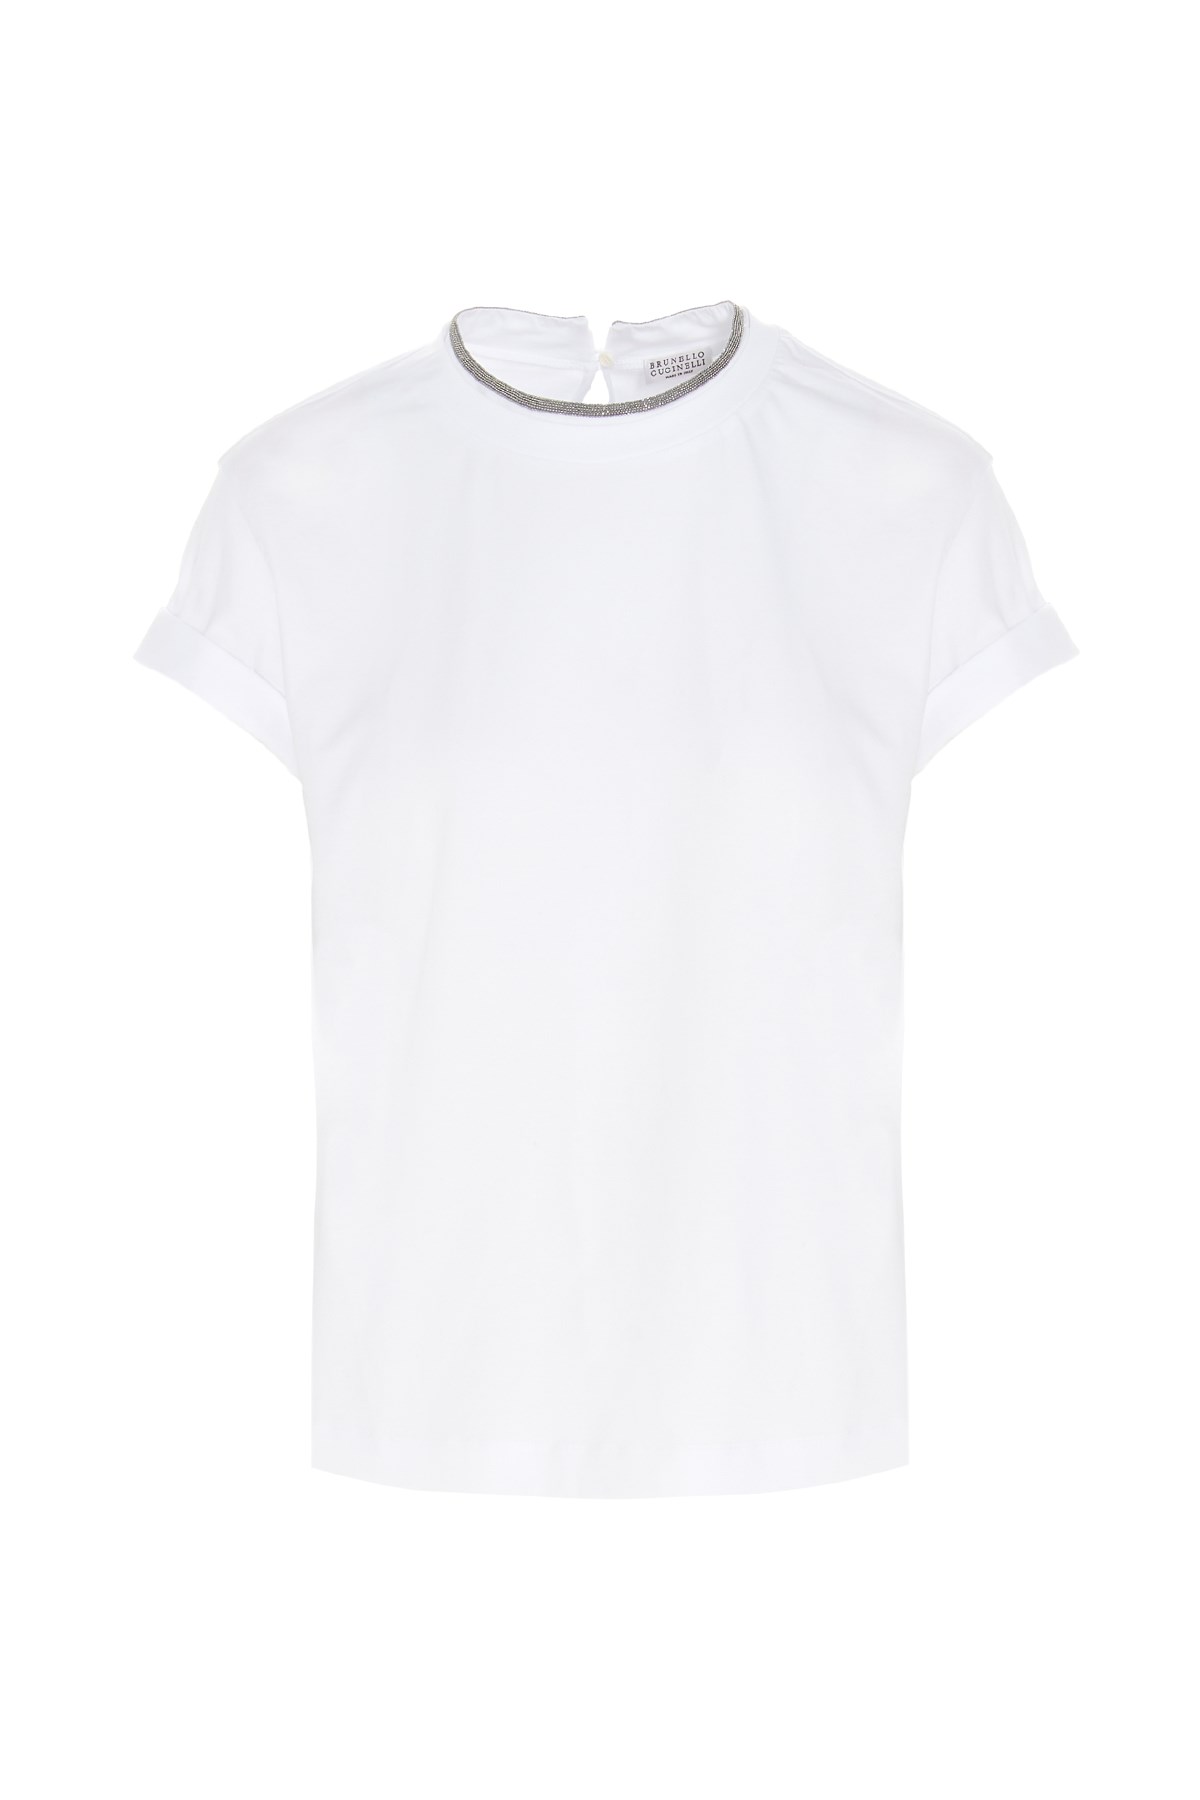 BRUNELLO CUCINELLI ‘Monile’ Jersey T-Shirt